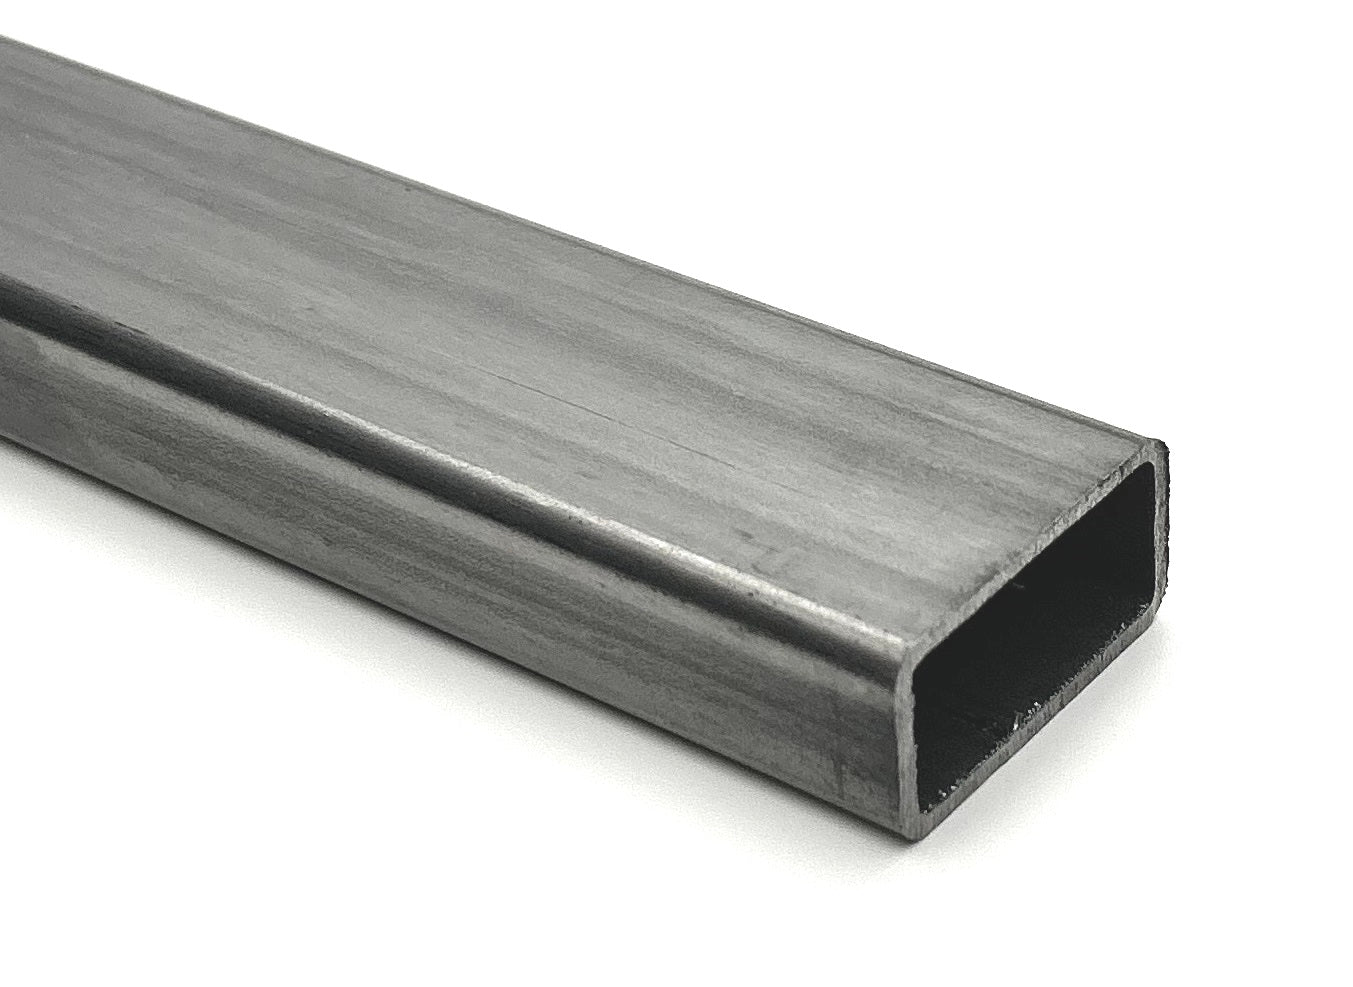 Sort stål - Rektangulært rør 60x20mm